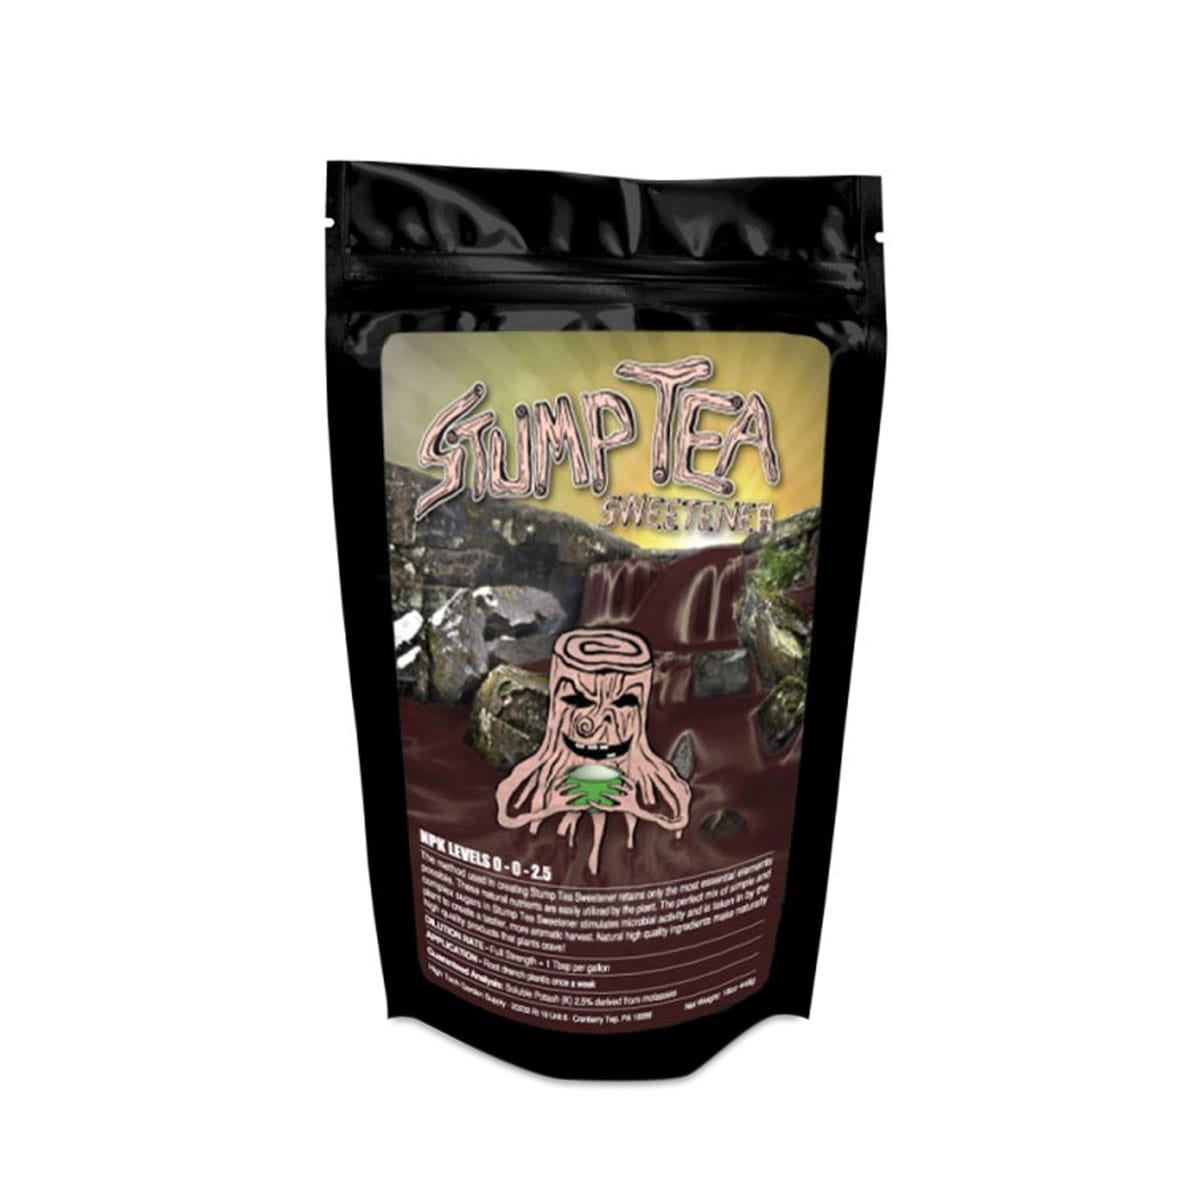 Stump Tea Sweetener 1 Pound